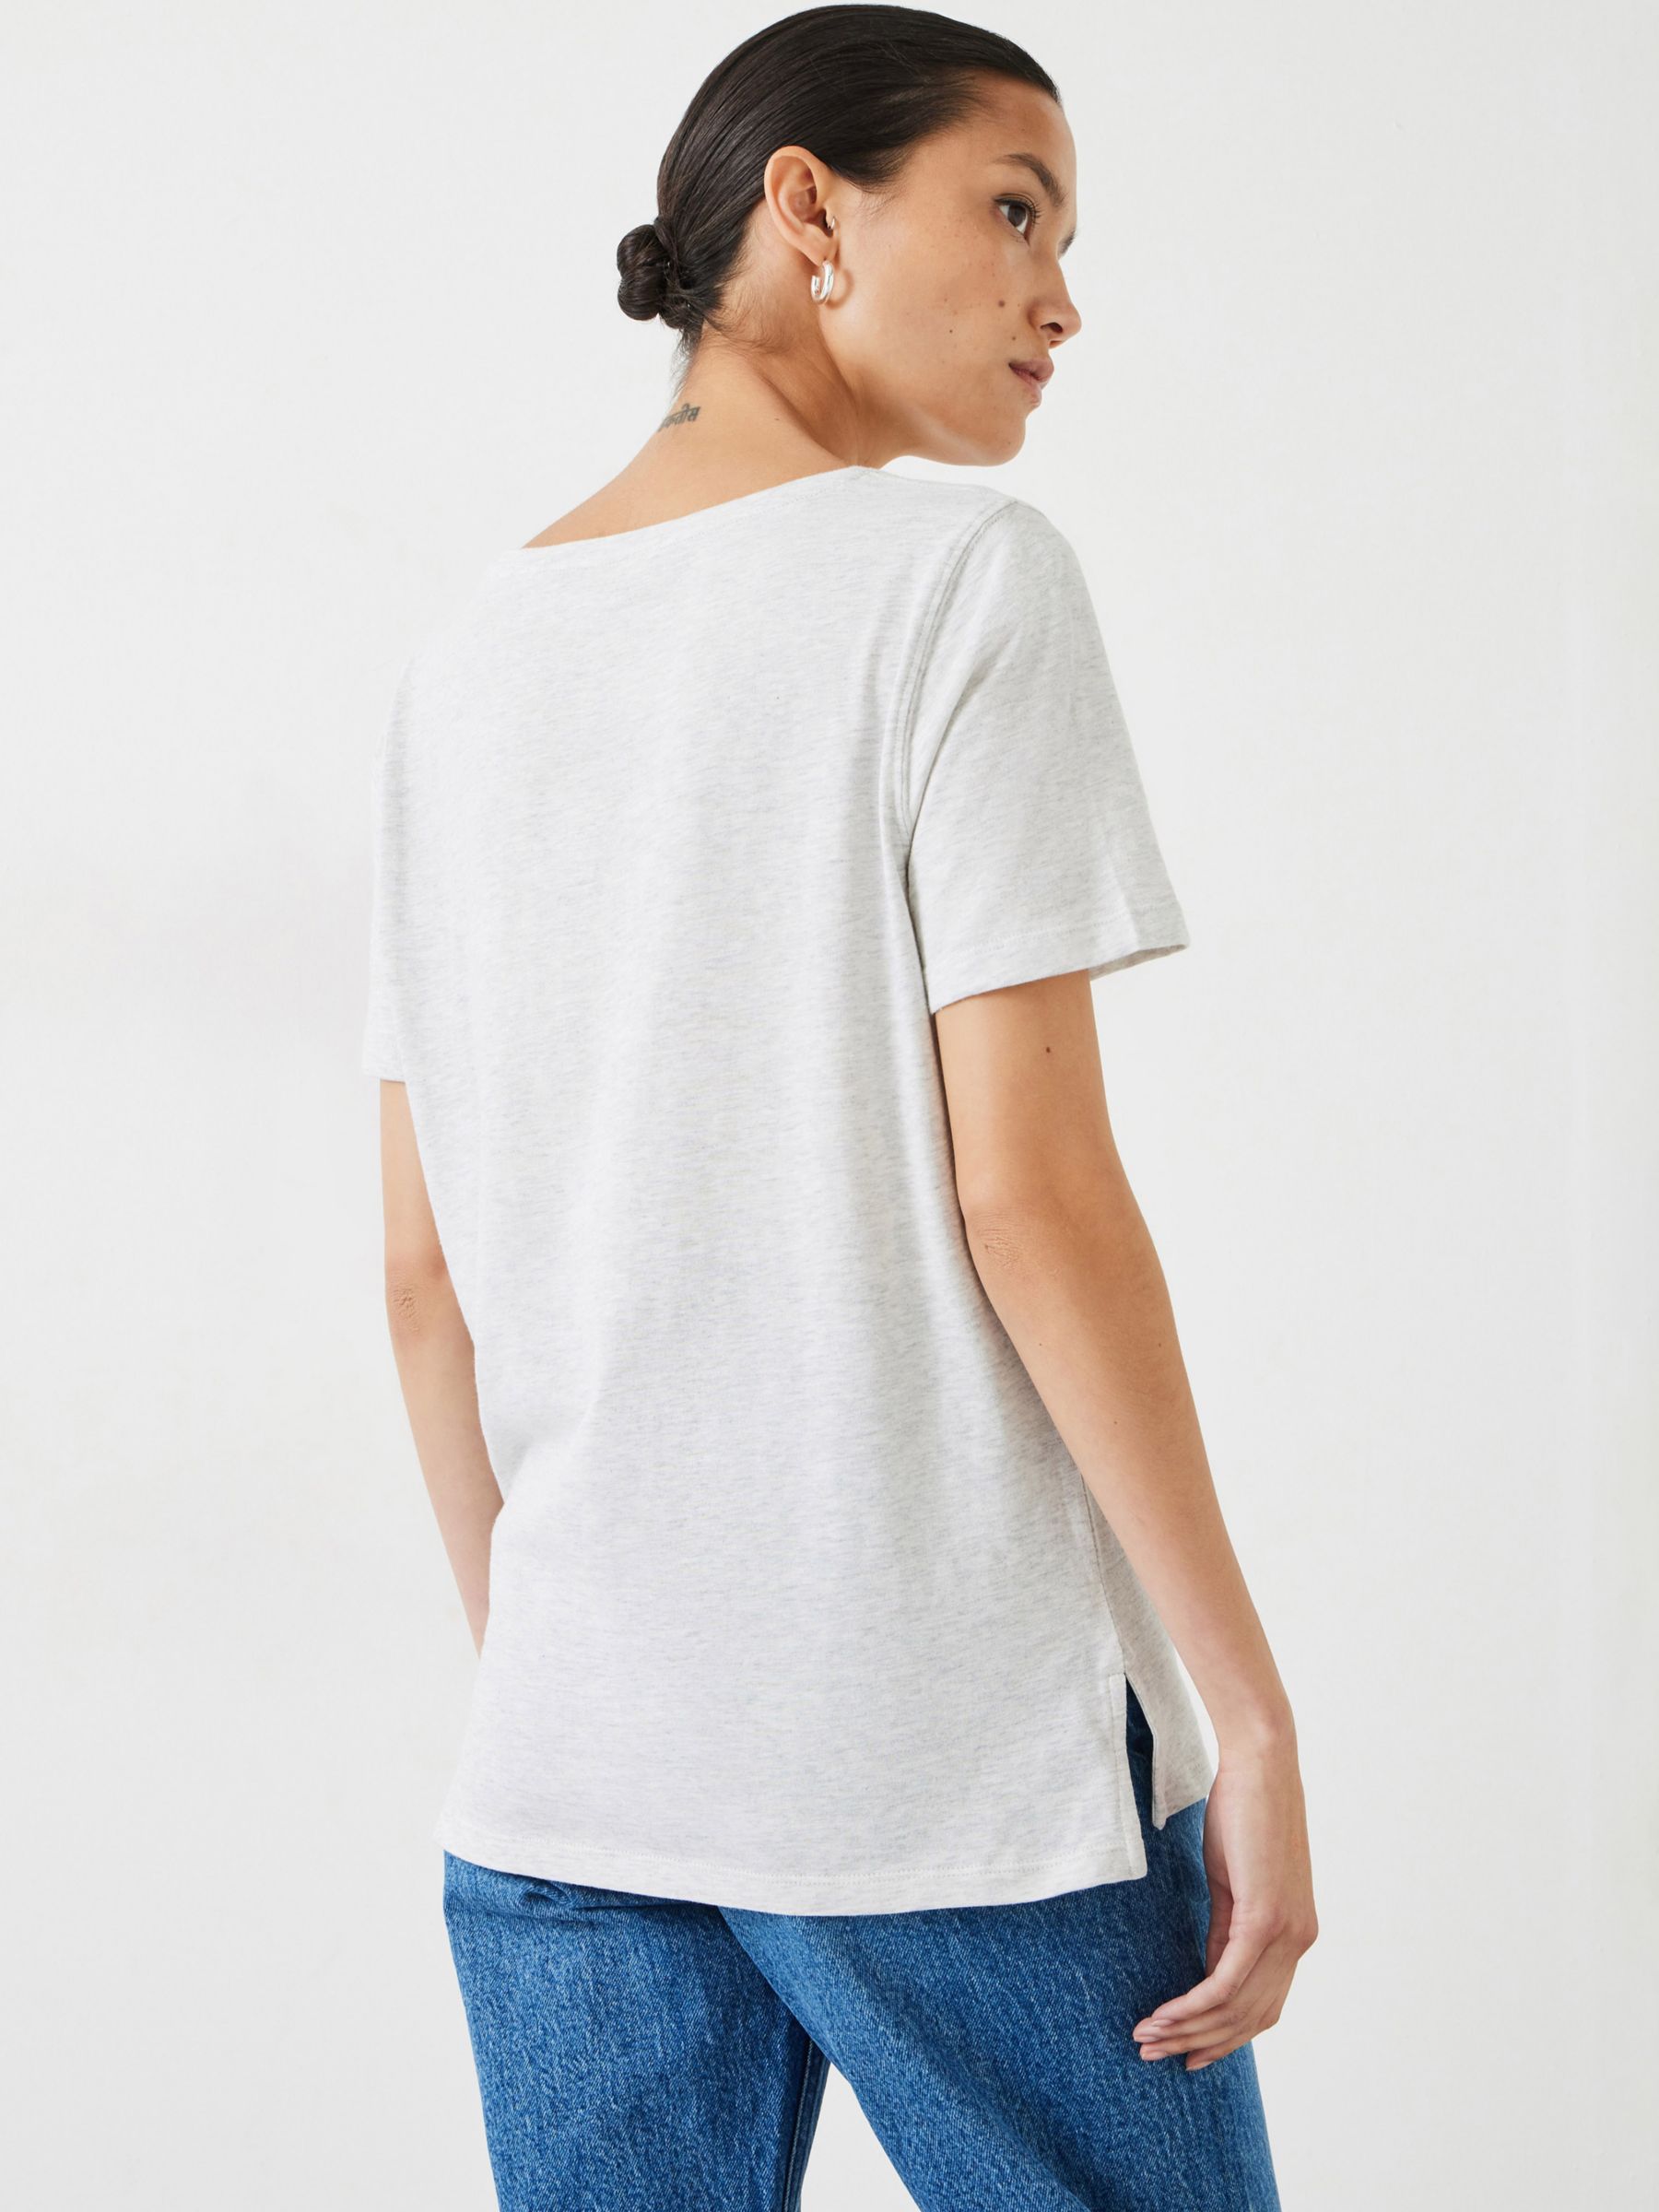 HUSH Kali Cotton Crew Neck T-Shirt, Lightest Grey Marl, XS